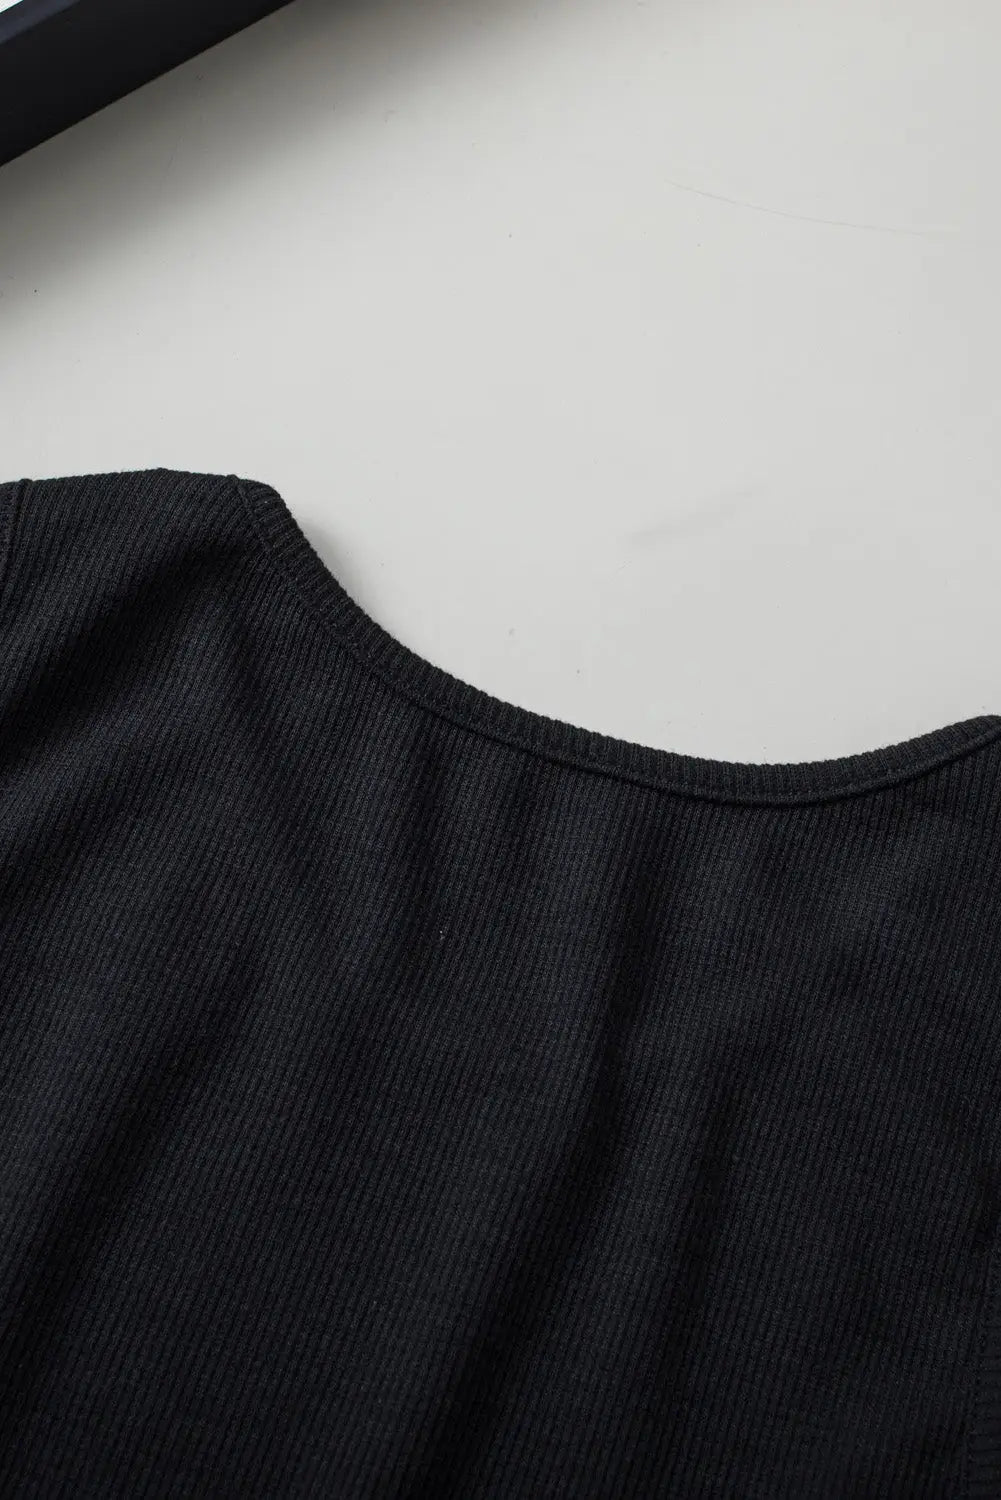 Black seamless sleeveless rib knit crop top - tops